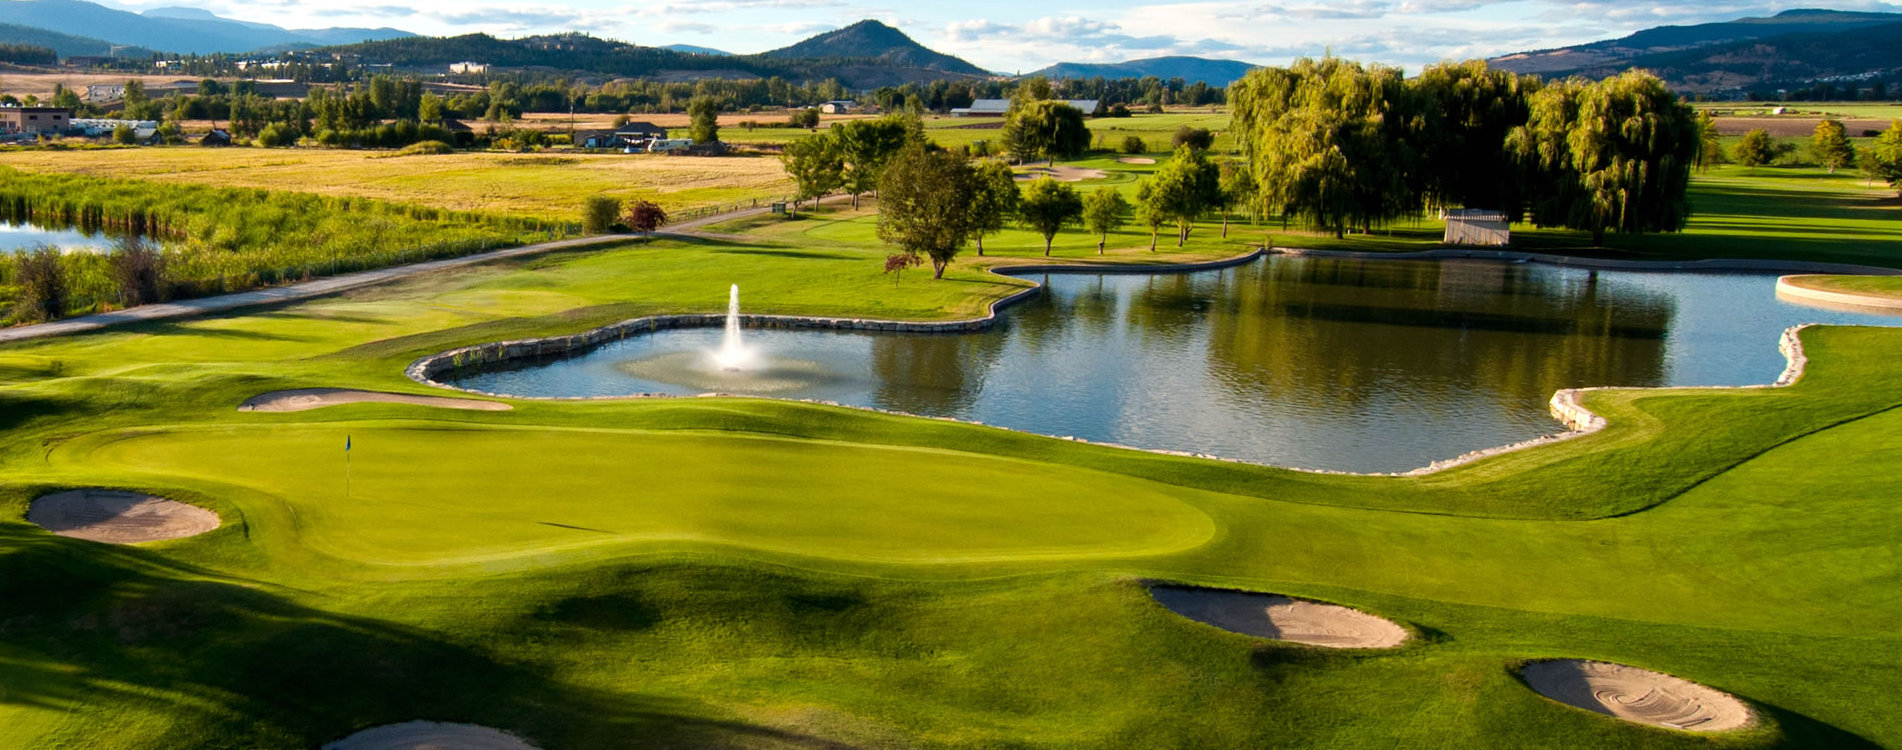 Kelowna Springs Golf Club Kelowna Bc Golf Course regarding The Most Amazing  golfing kelowna intended for  Property